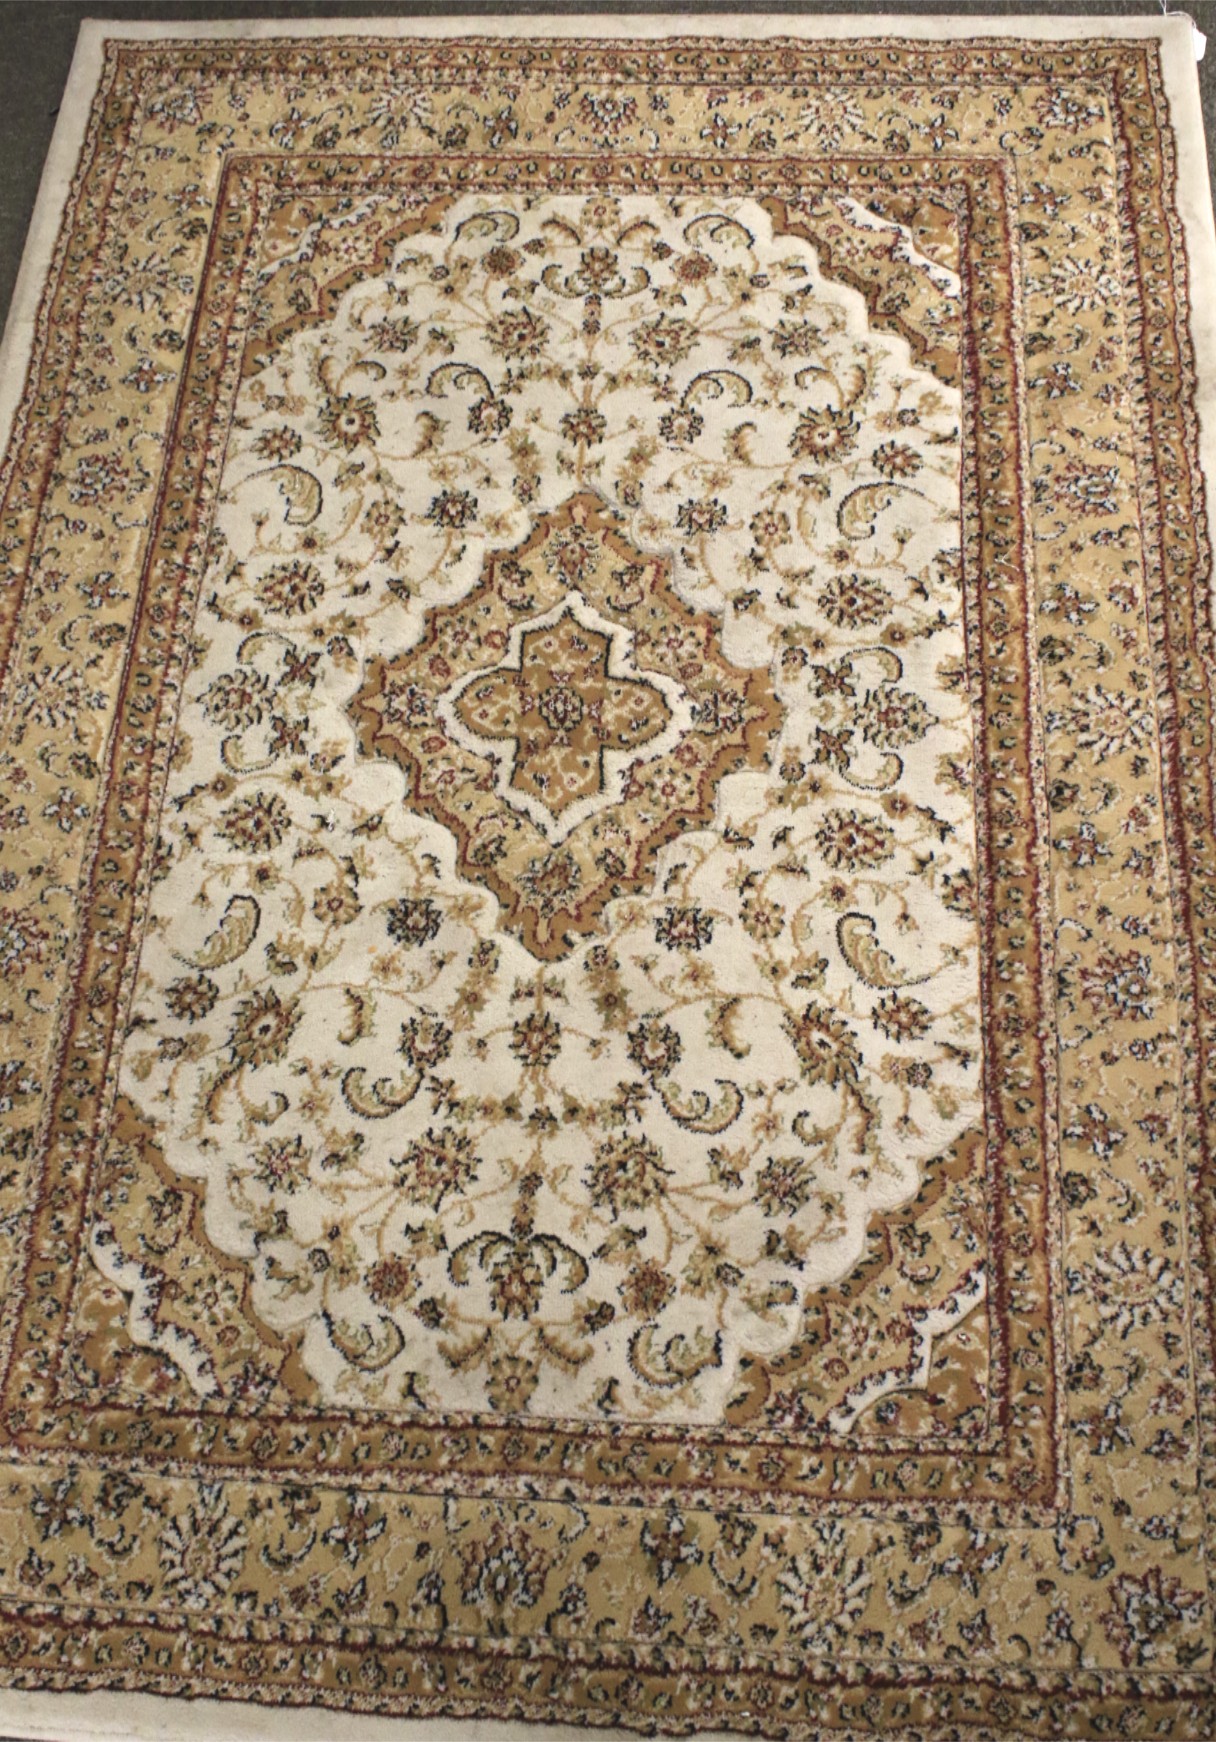 A contemporary cream floor rug.